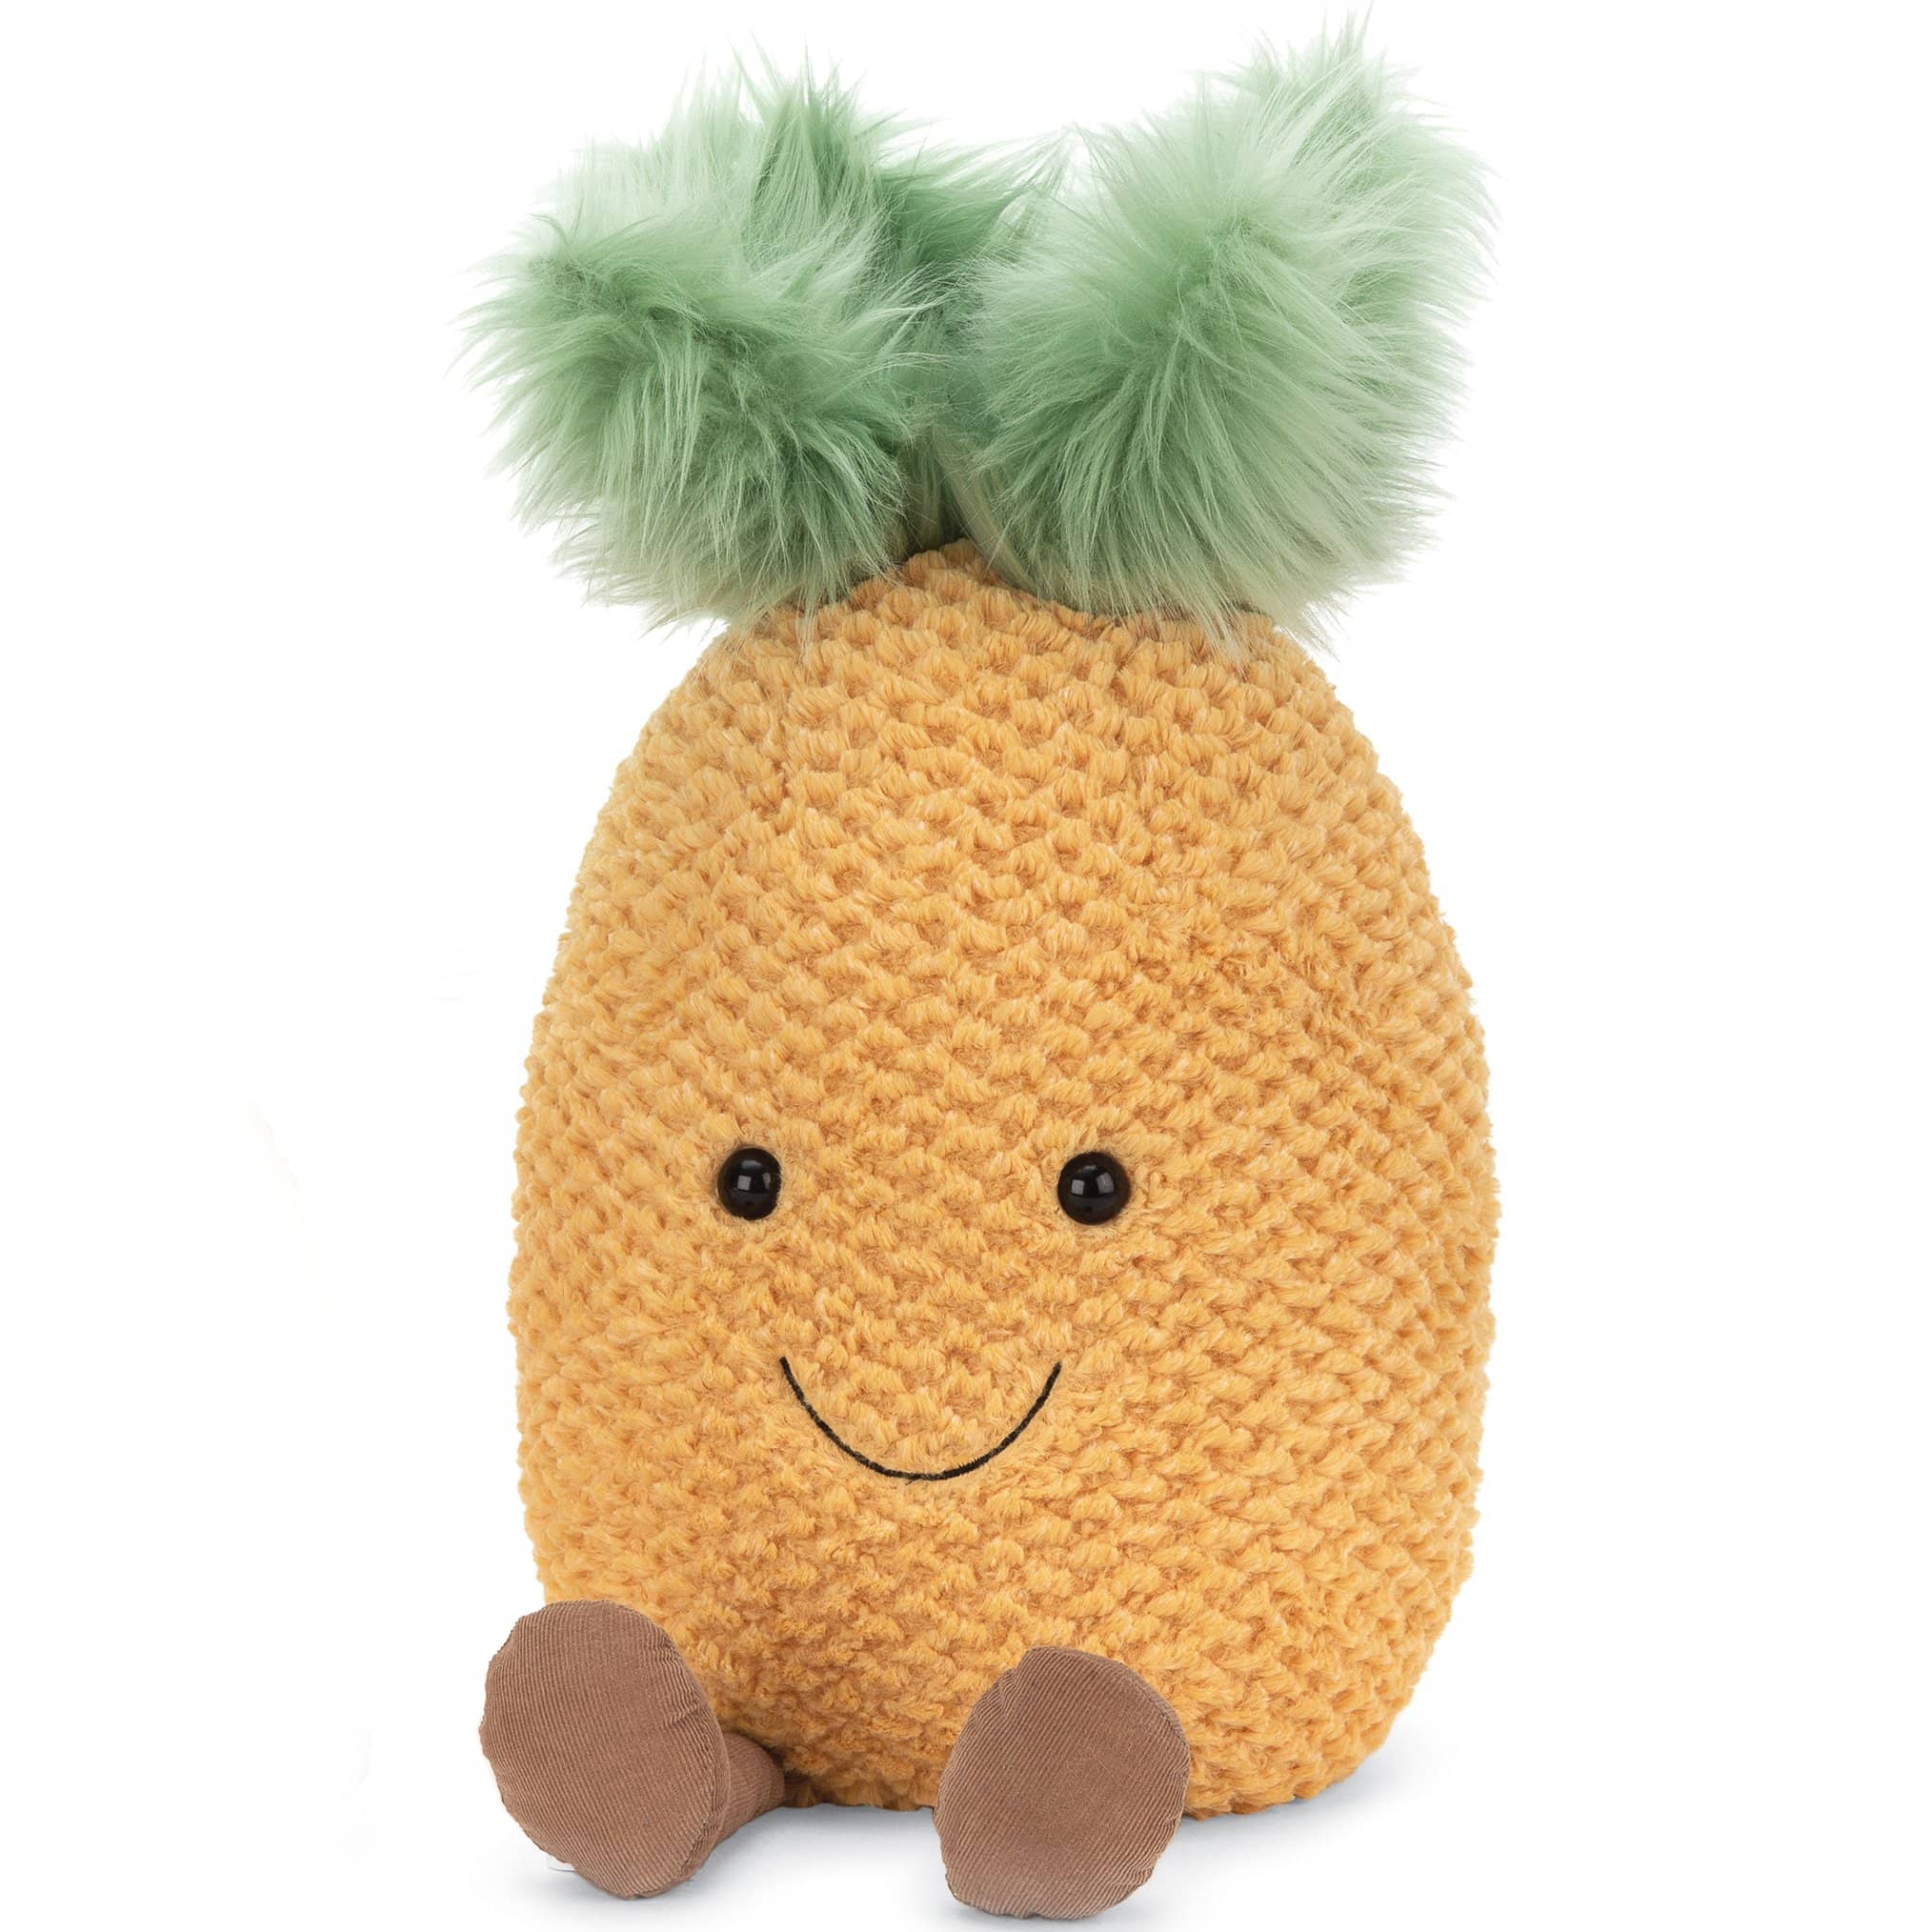 Amuseables Pineapple Small-Kidding Around NYC